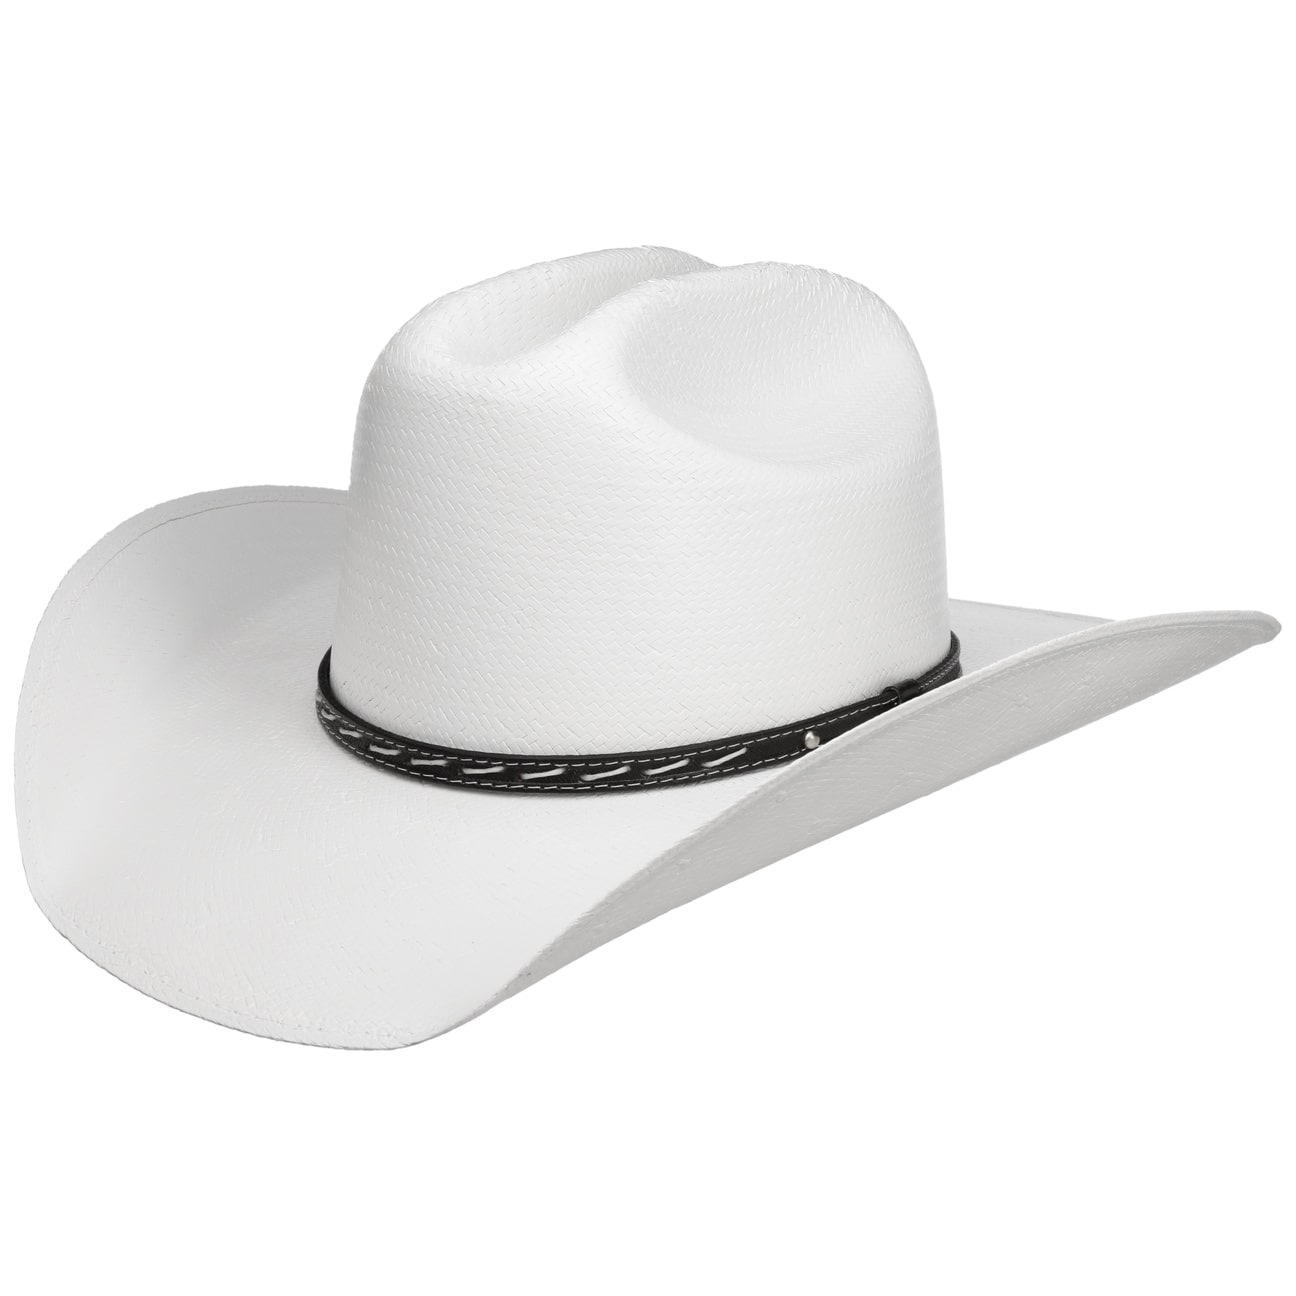 Stetson - Vanlesco Western Toyo Straw Hat - White